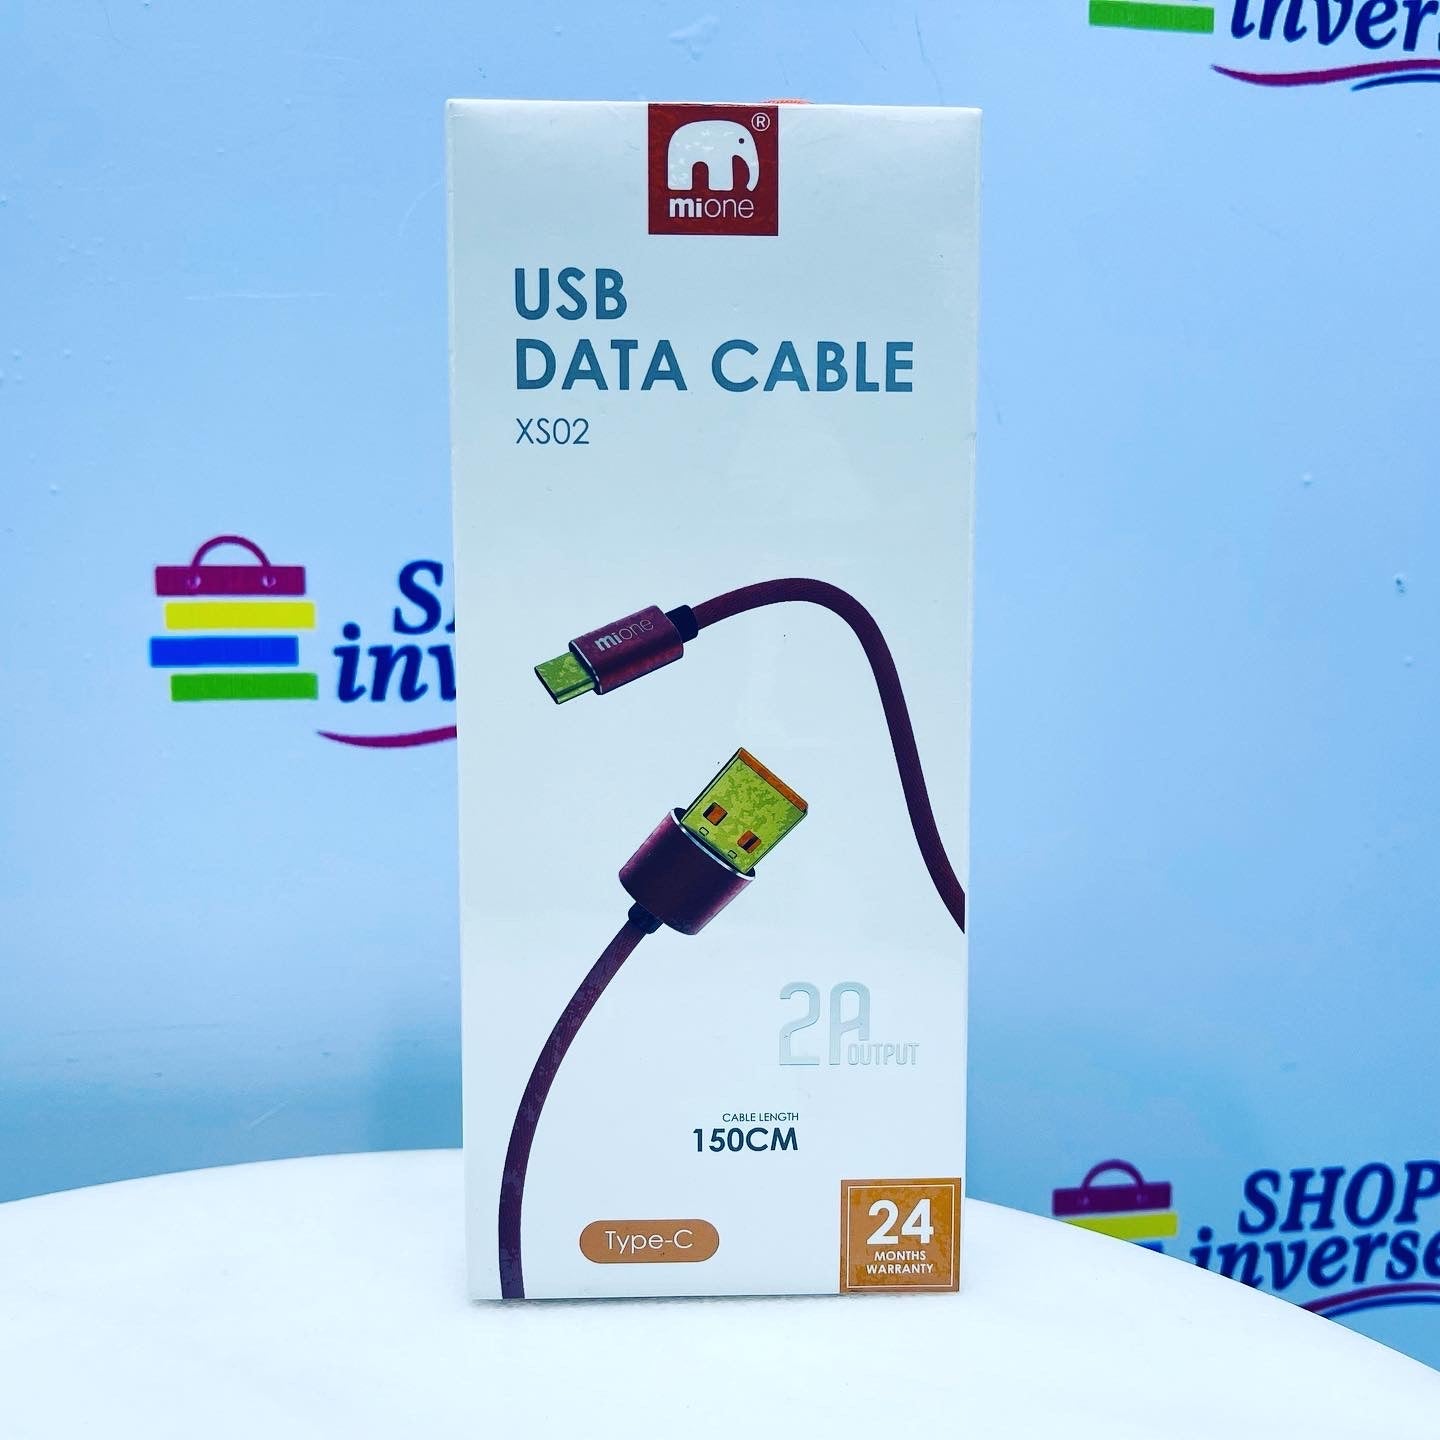 Mione XS02 Micro USB Data Cable SHOPINVERSE